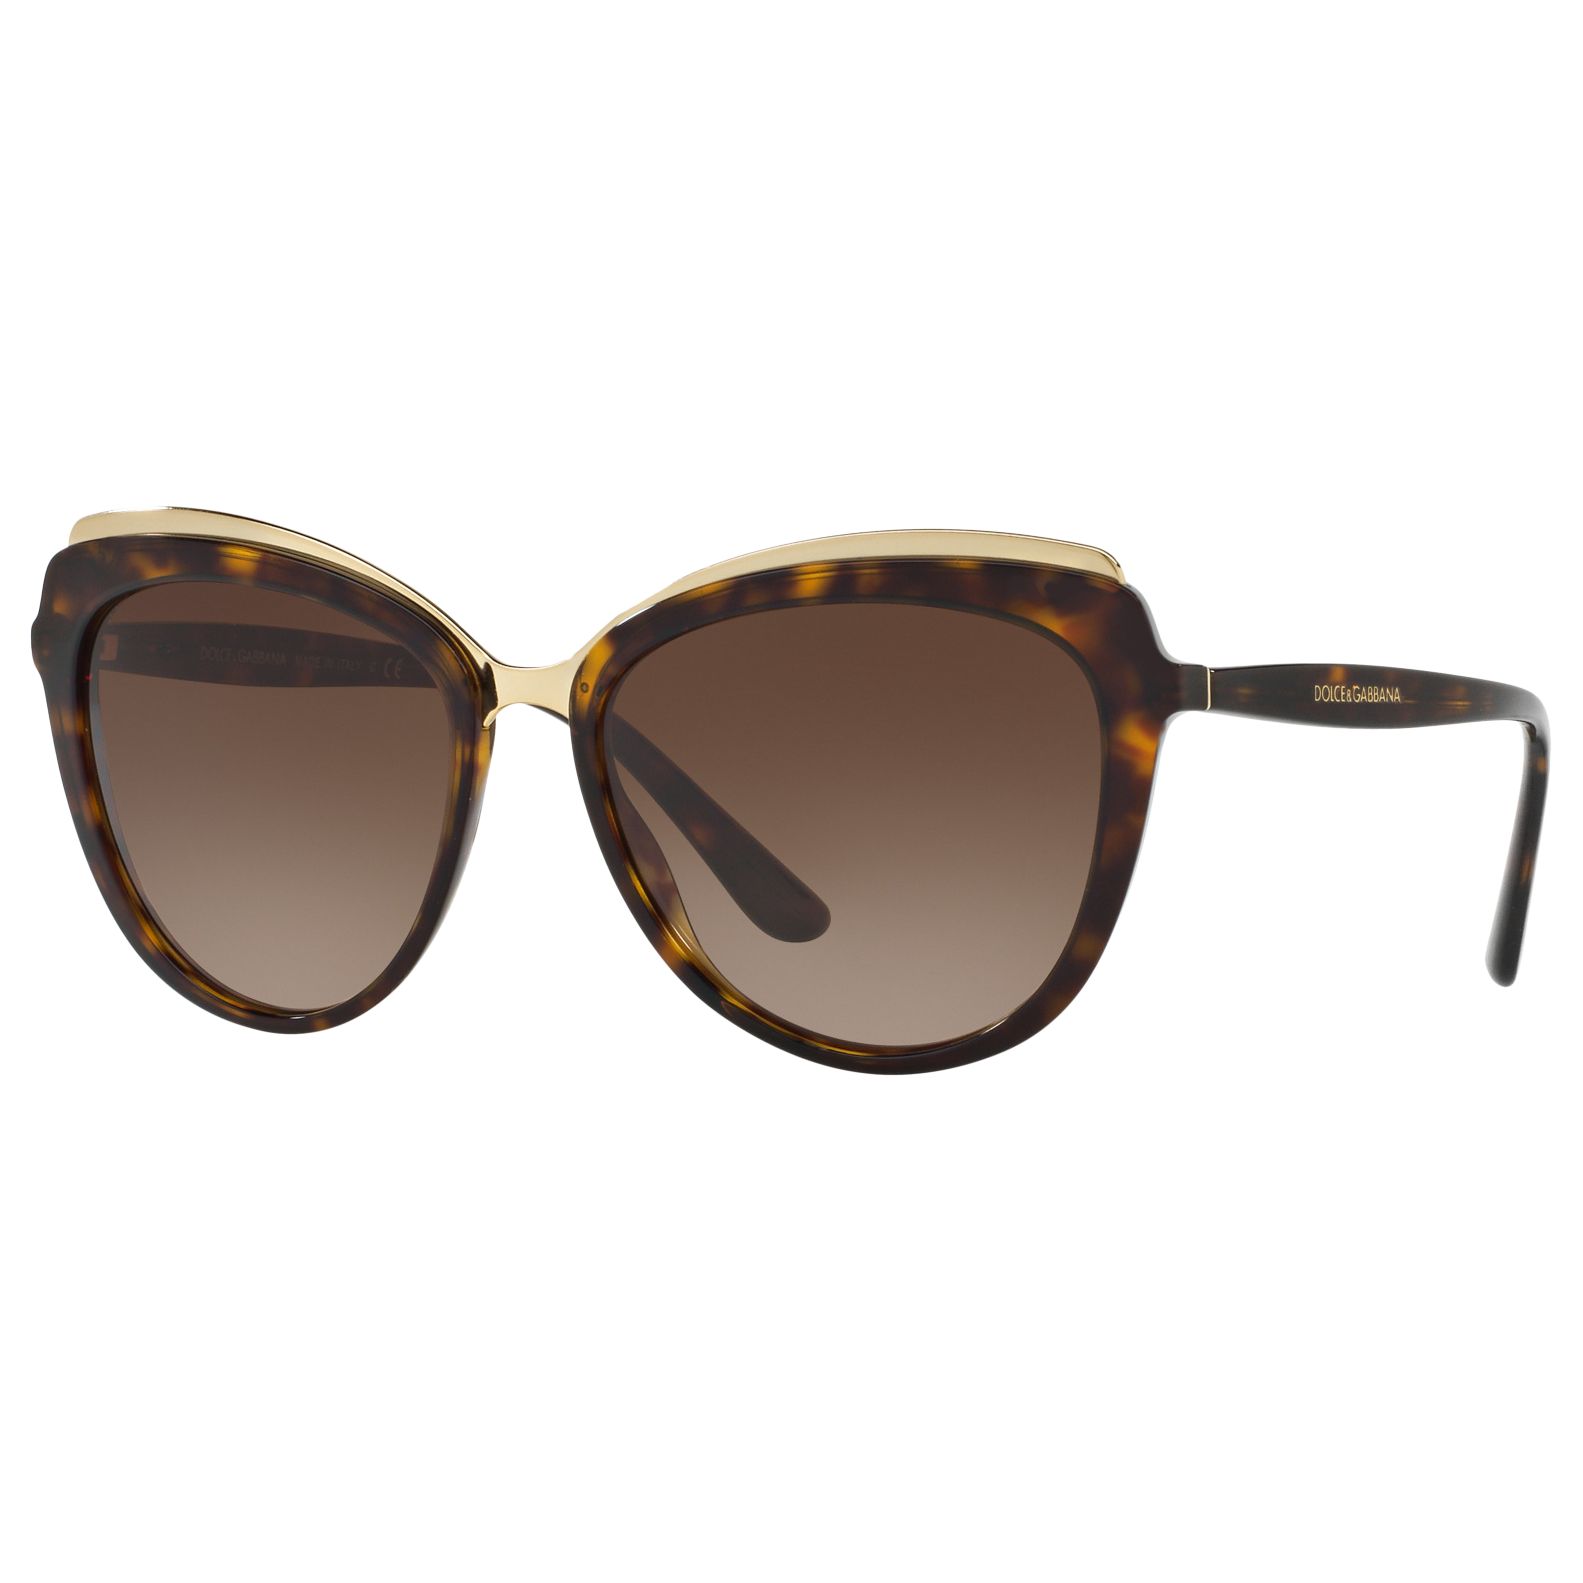 Dolce & Gabbana DG4304 Cat's Eye Sunglasses